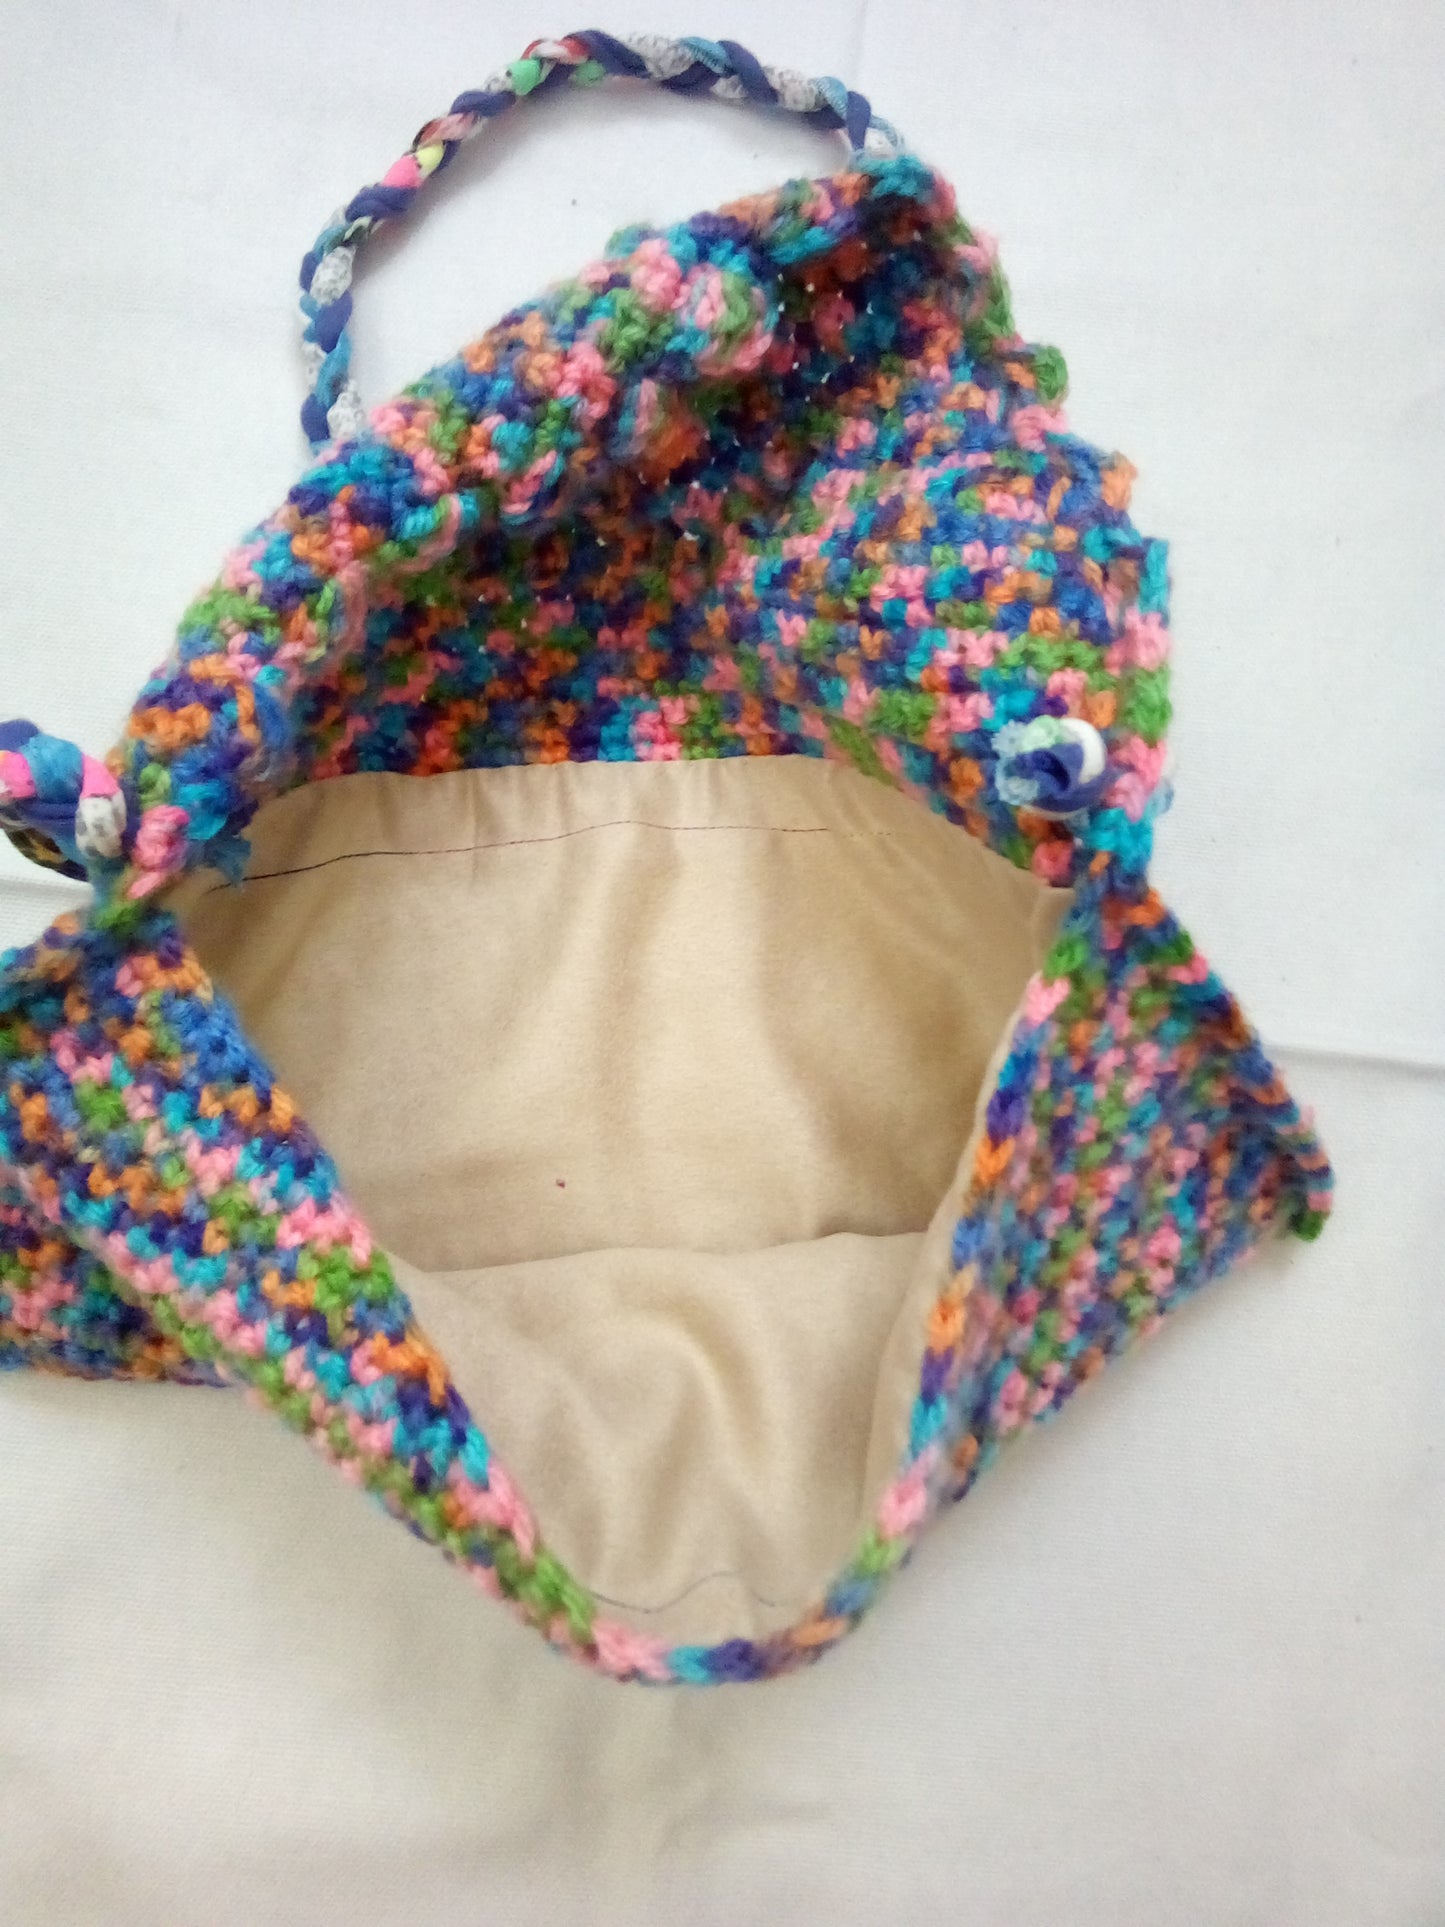 Crochet handbag, multicolour with heart design